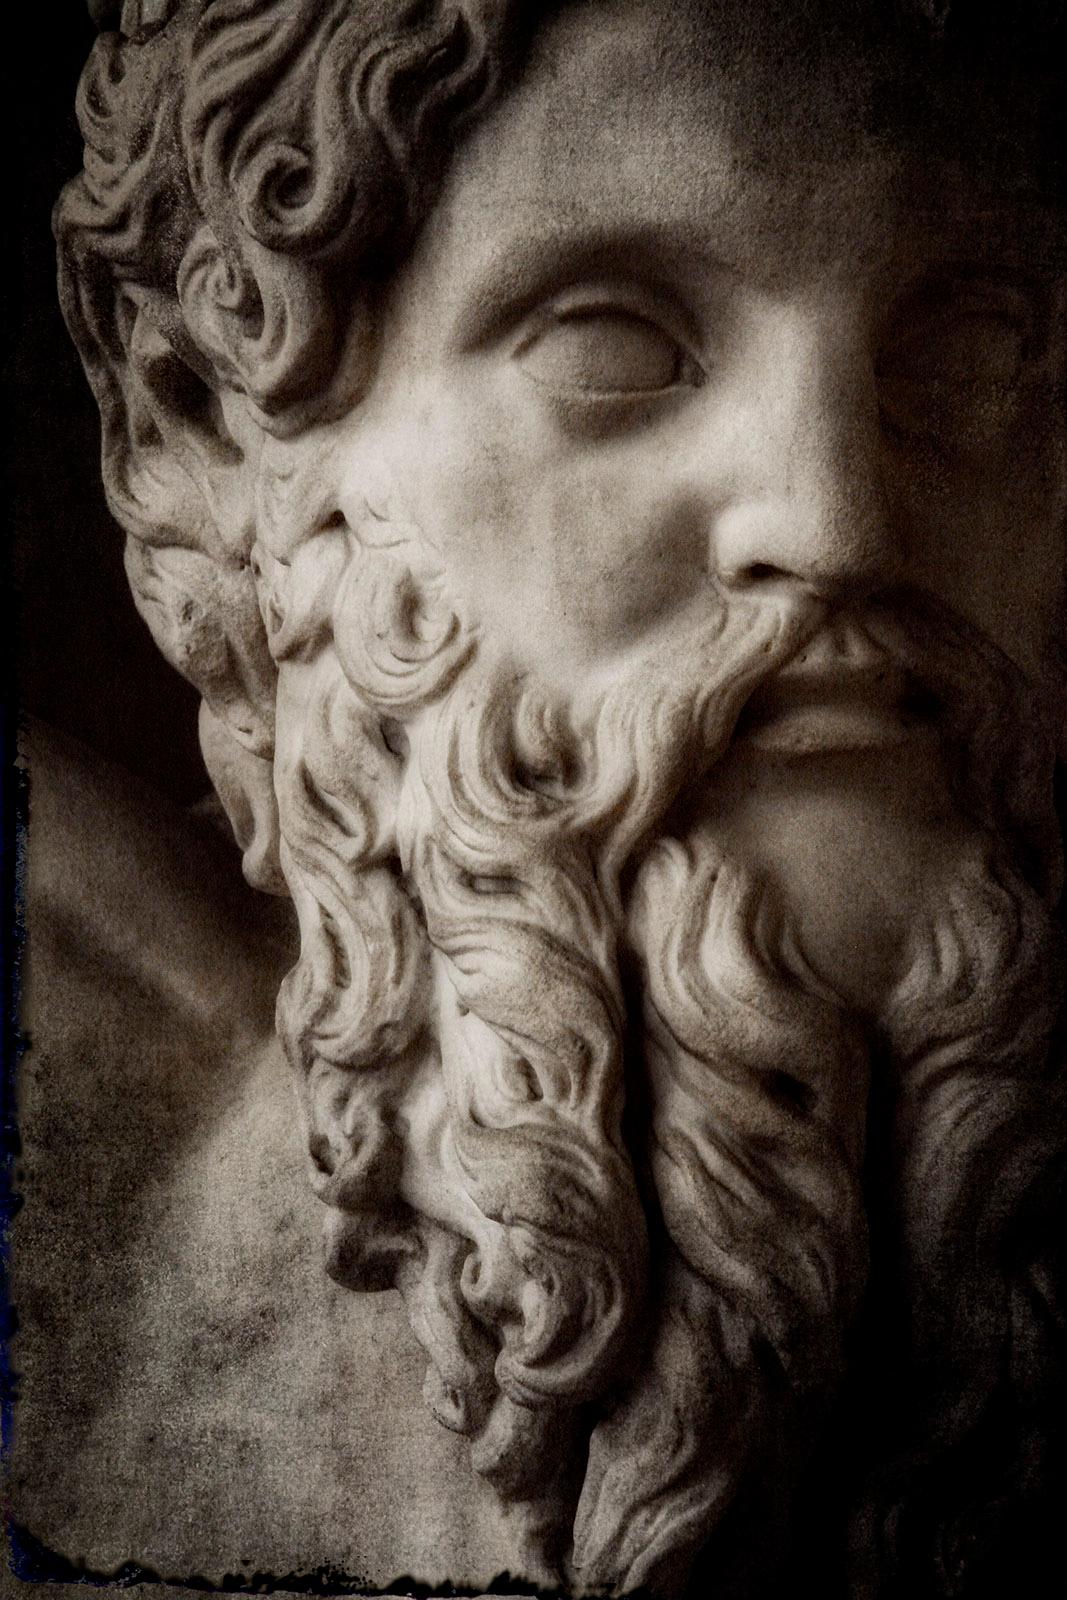 Italia 2 - Signed limited edition pigment print, Sculpture, Greek god, Mythology - Romantic Photograph by Michael Banks